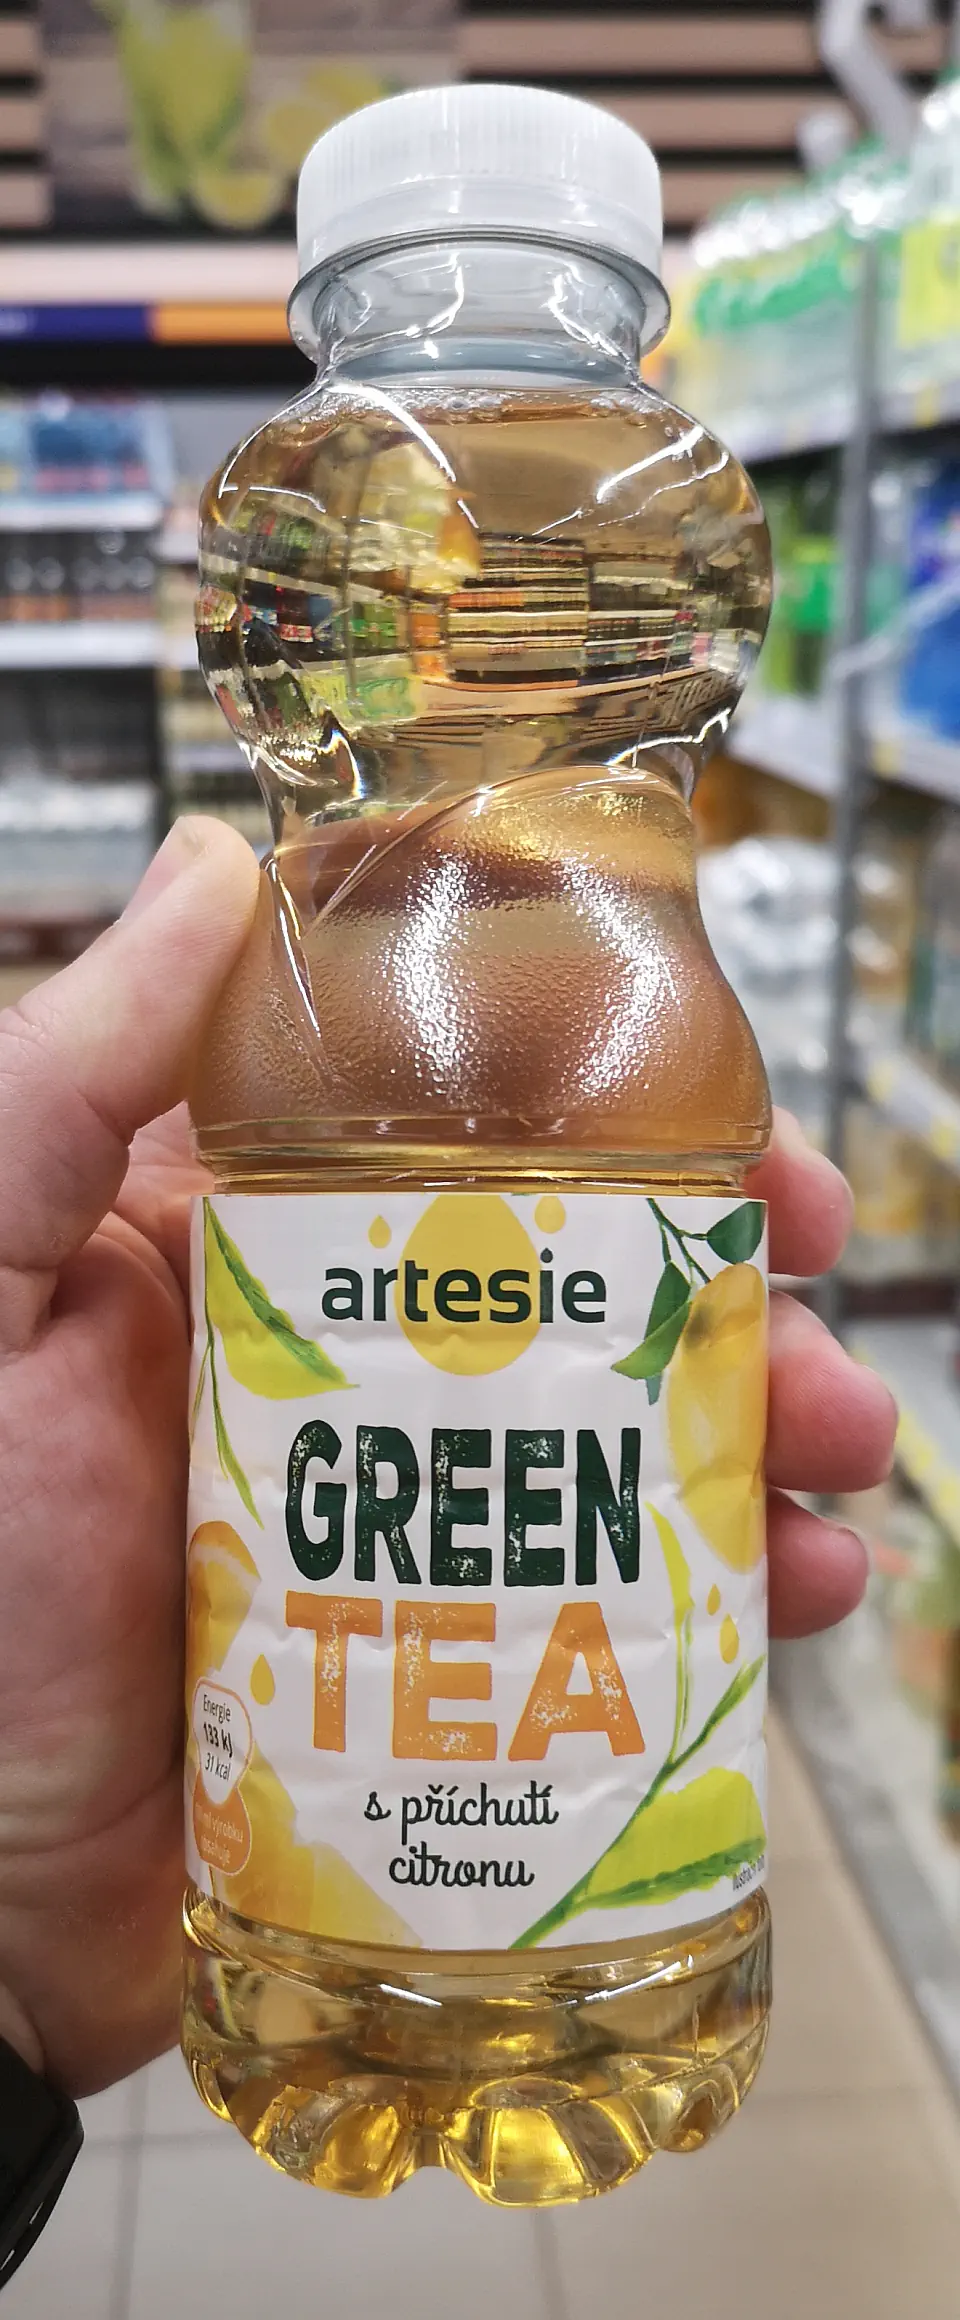 artesie Green tea s příchutí citronu